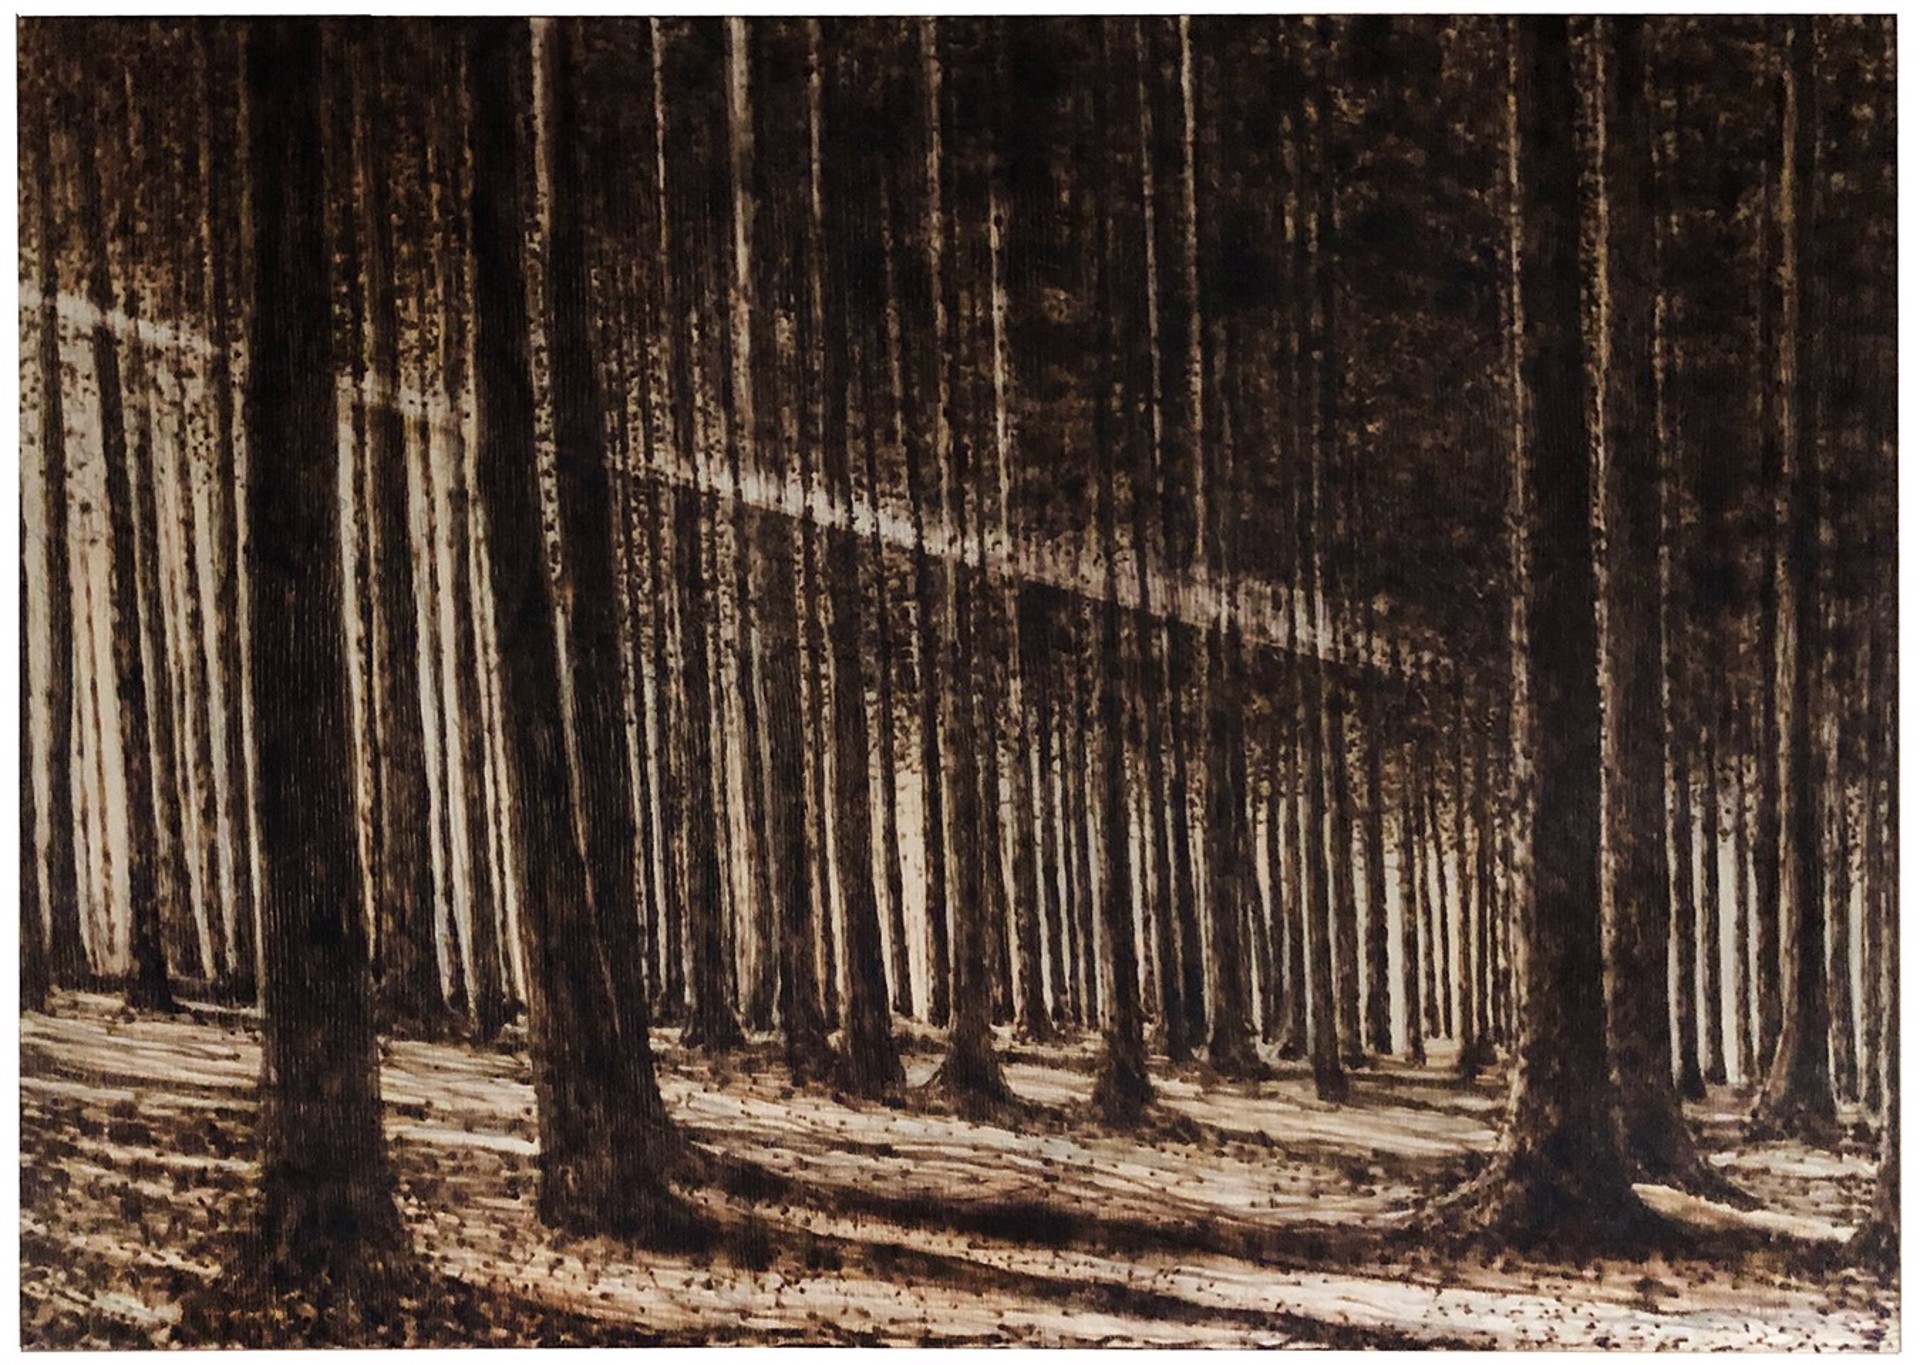 Light Through the Trees by Paul Chojnowski